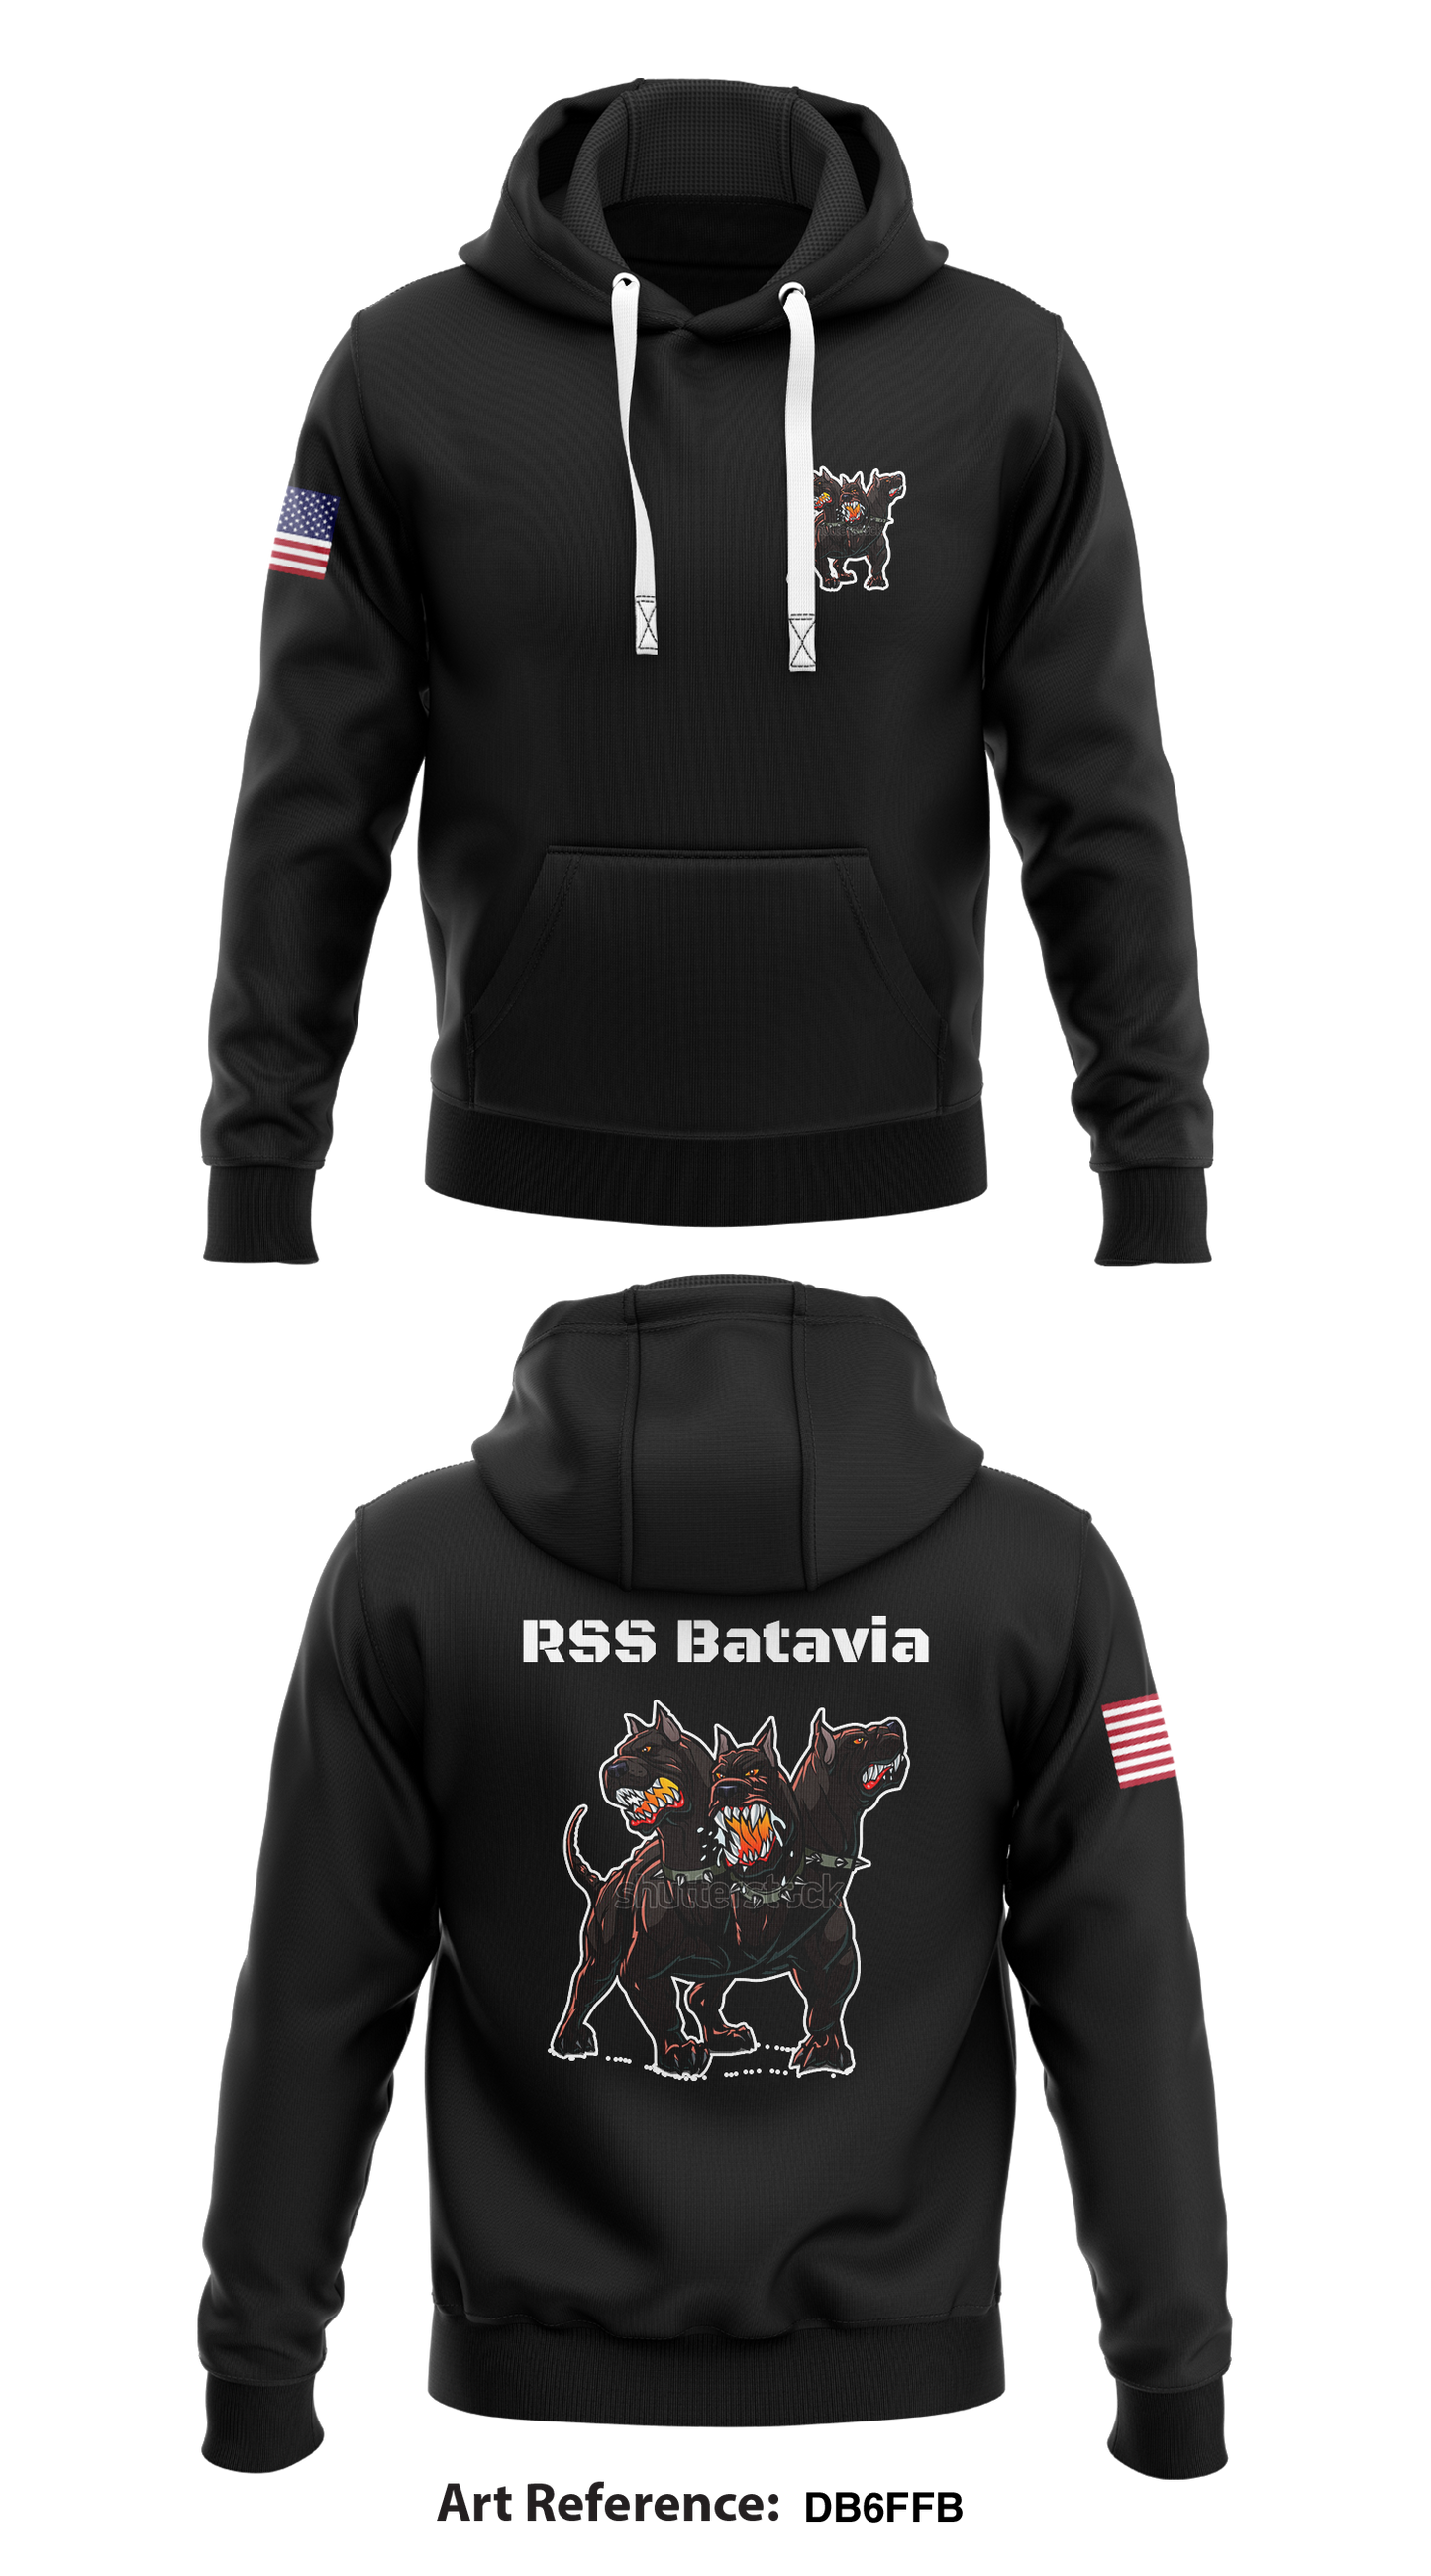 RSS Batavia Store 1 Core Men's Hooded Performance Sweatshirt - DB6FFb